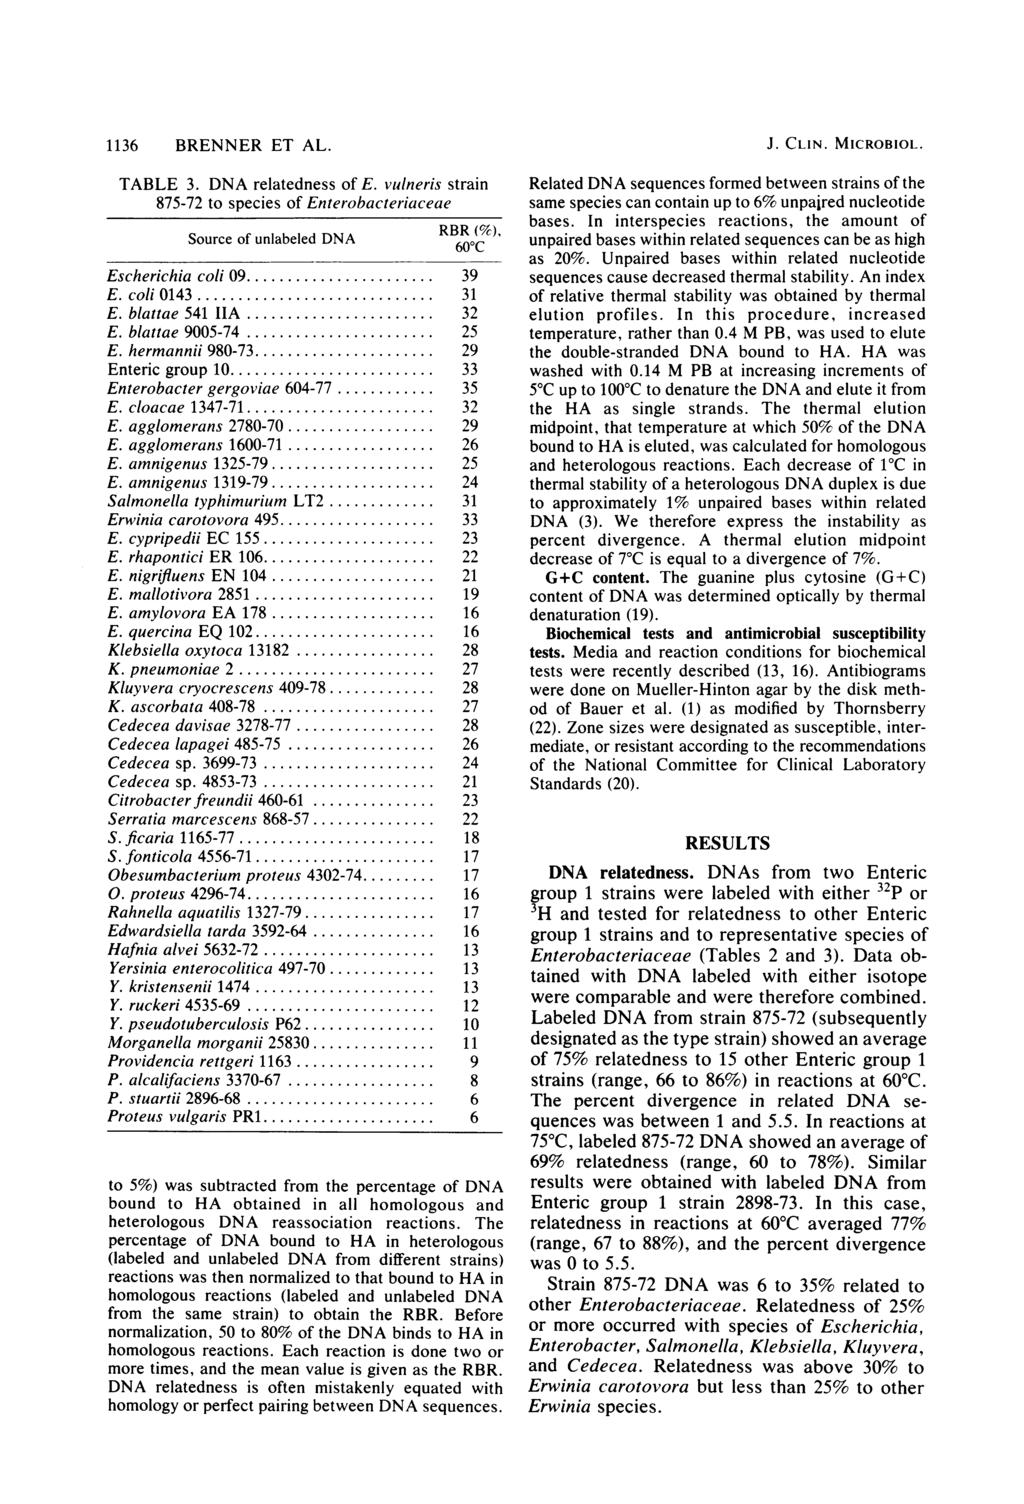 1136 BRENNER ET AL. TABLE 3. DNA relatedness of E. vulneris strain 875-72 to species of Enterobacteriaceae Source of unlabeled DNA Escherichia coli 9... E. coli 143... E. blattae 541 IIA... E. blattae 95-74.